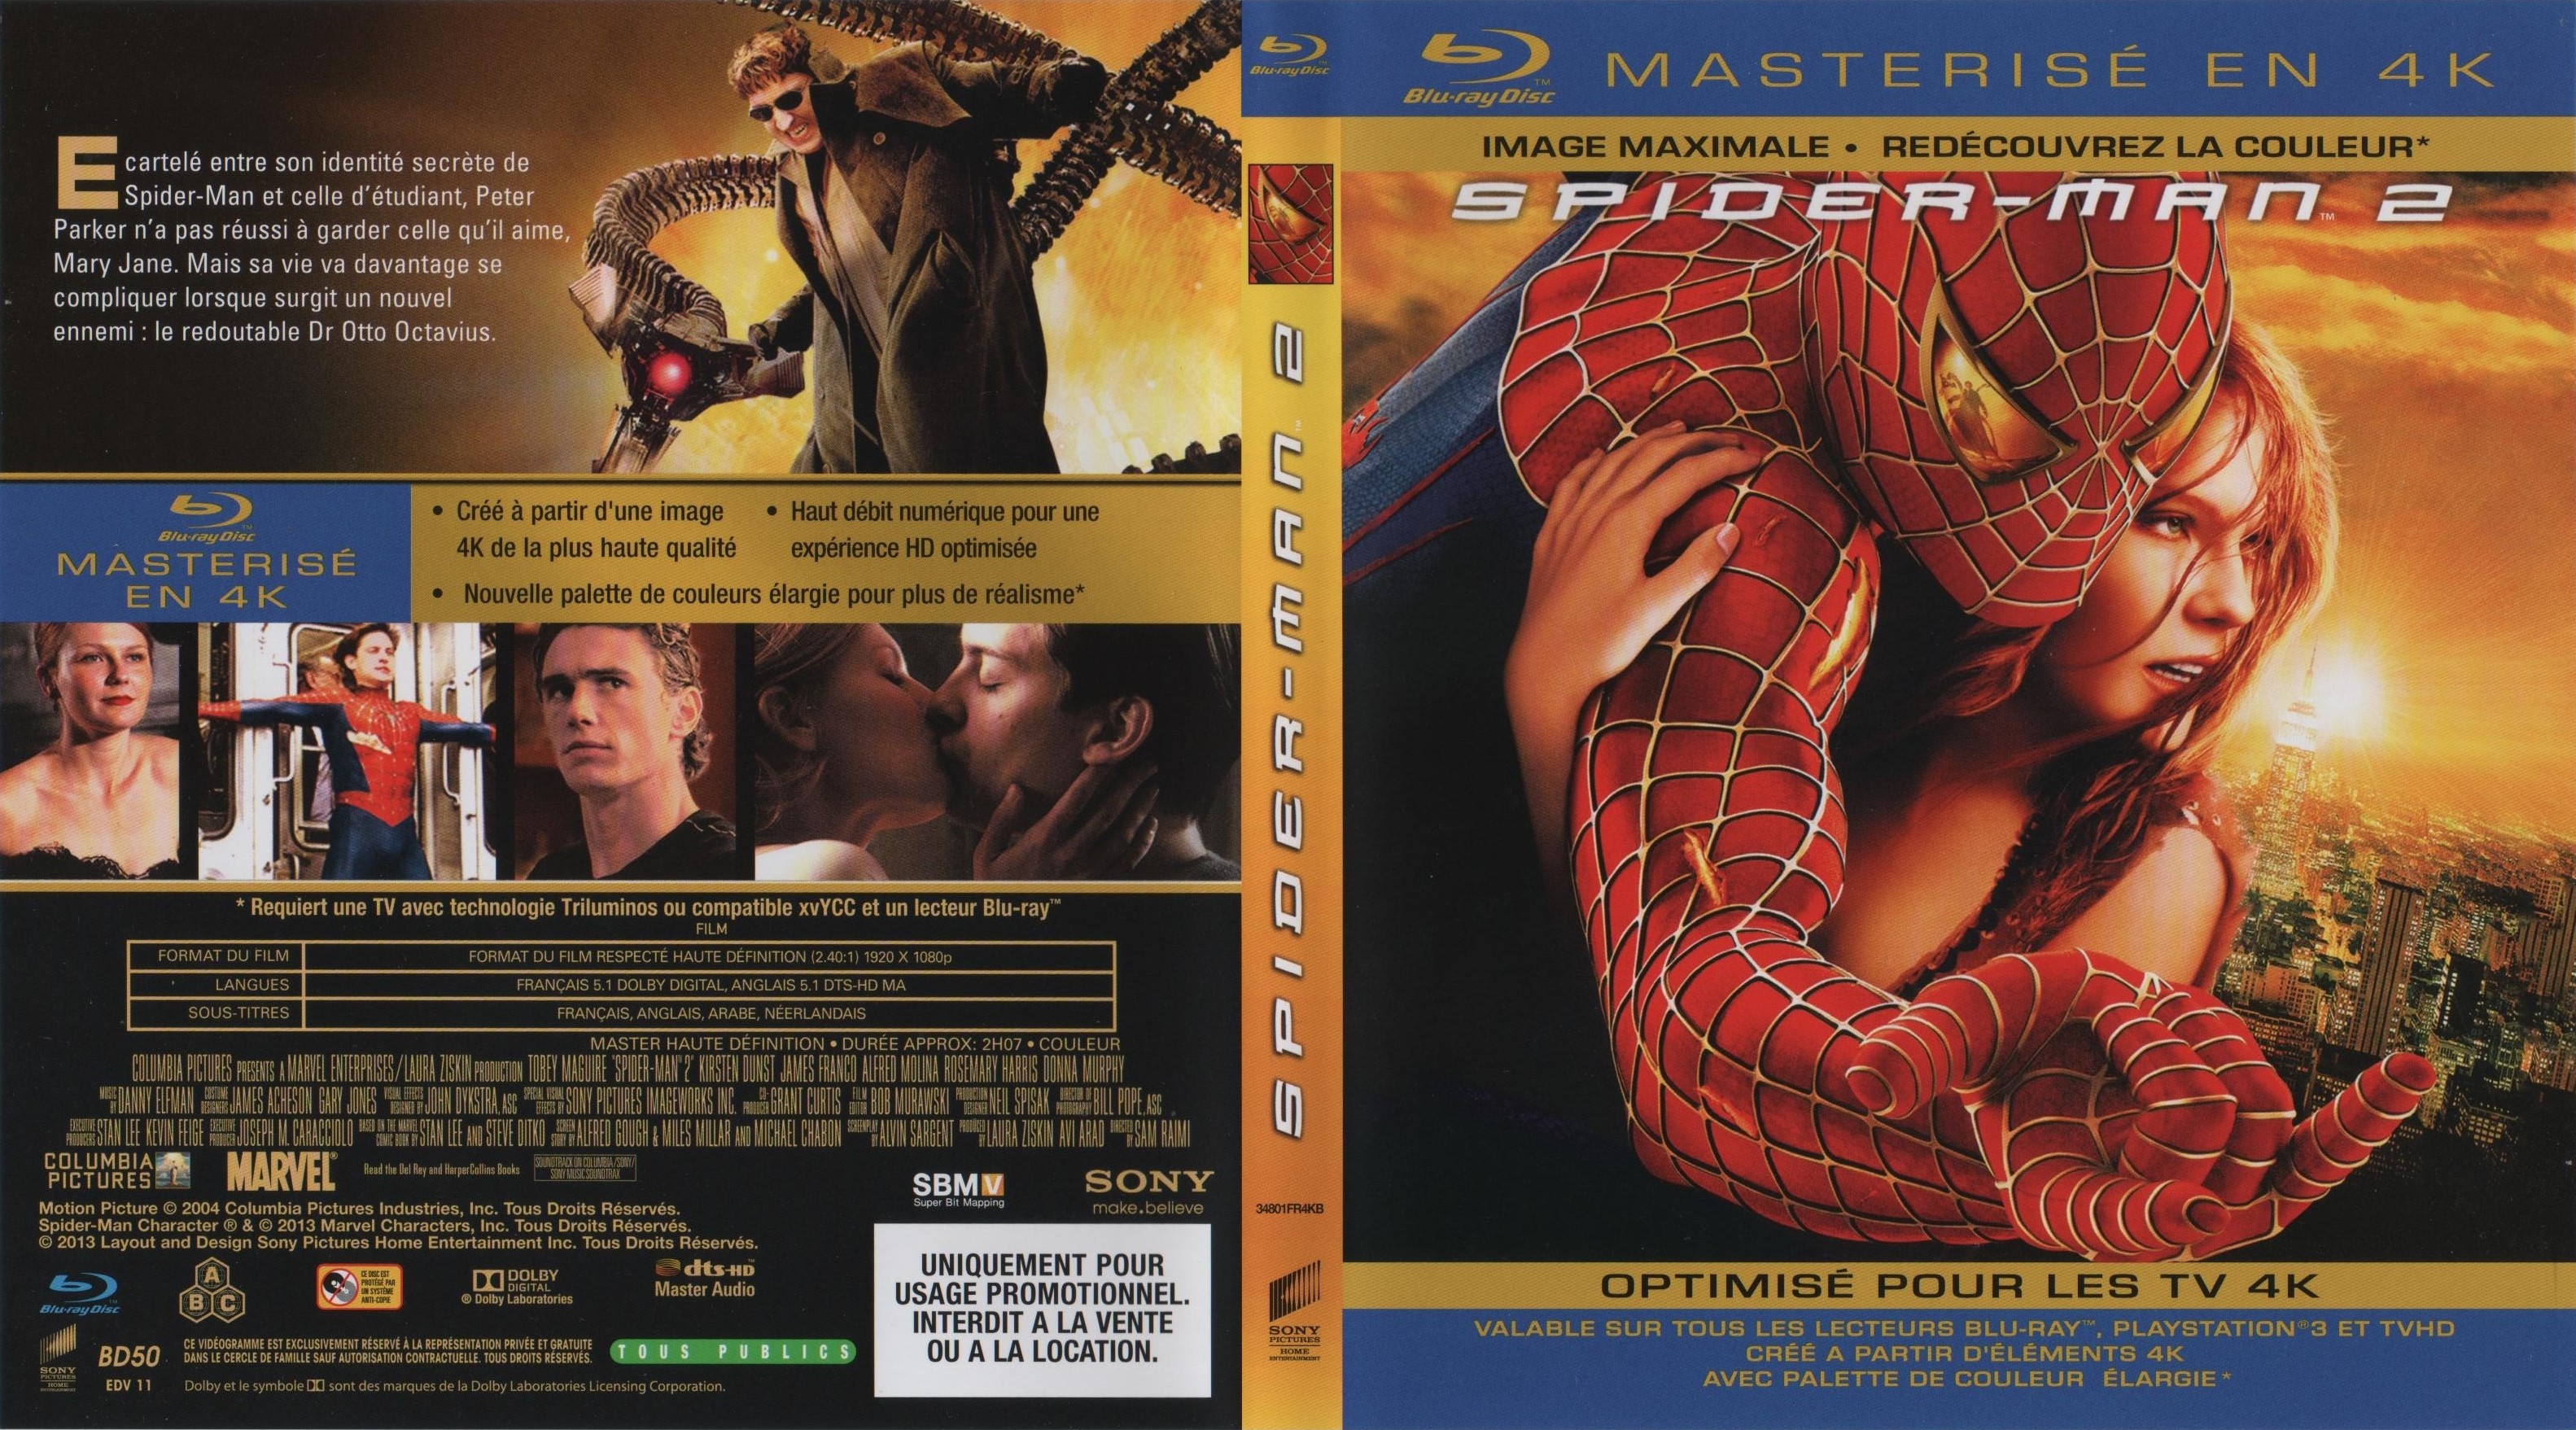 Jaquette DVD Spiderman 2 (BLU-RAY) v2